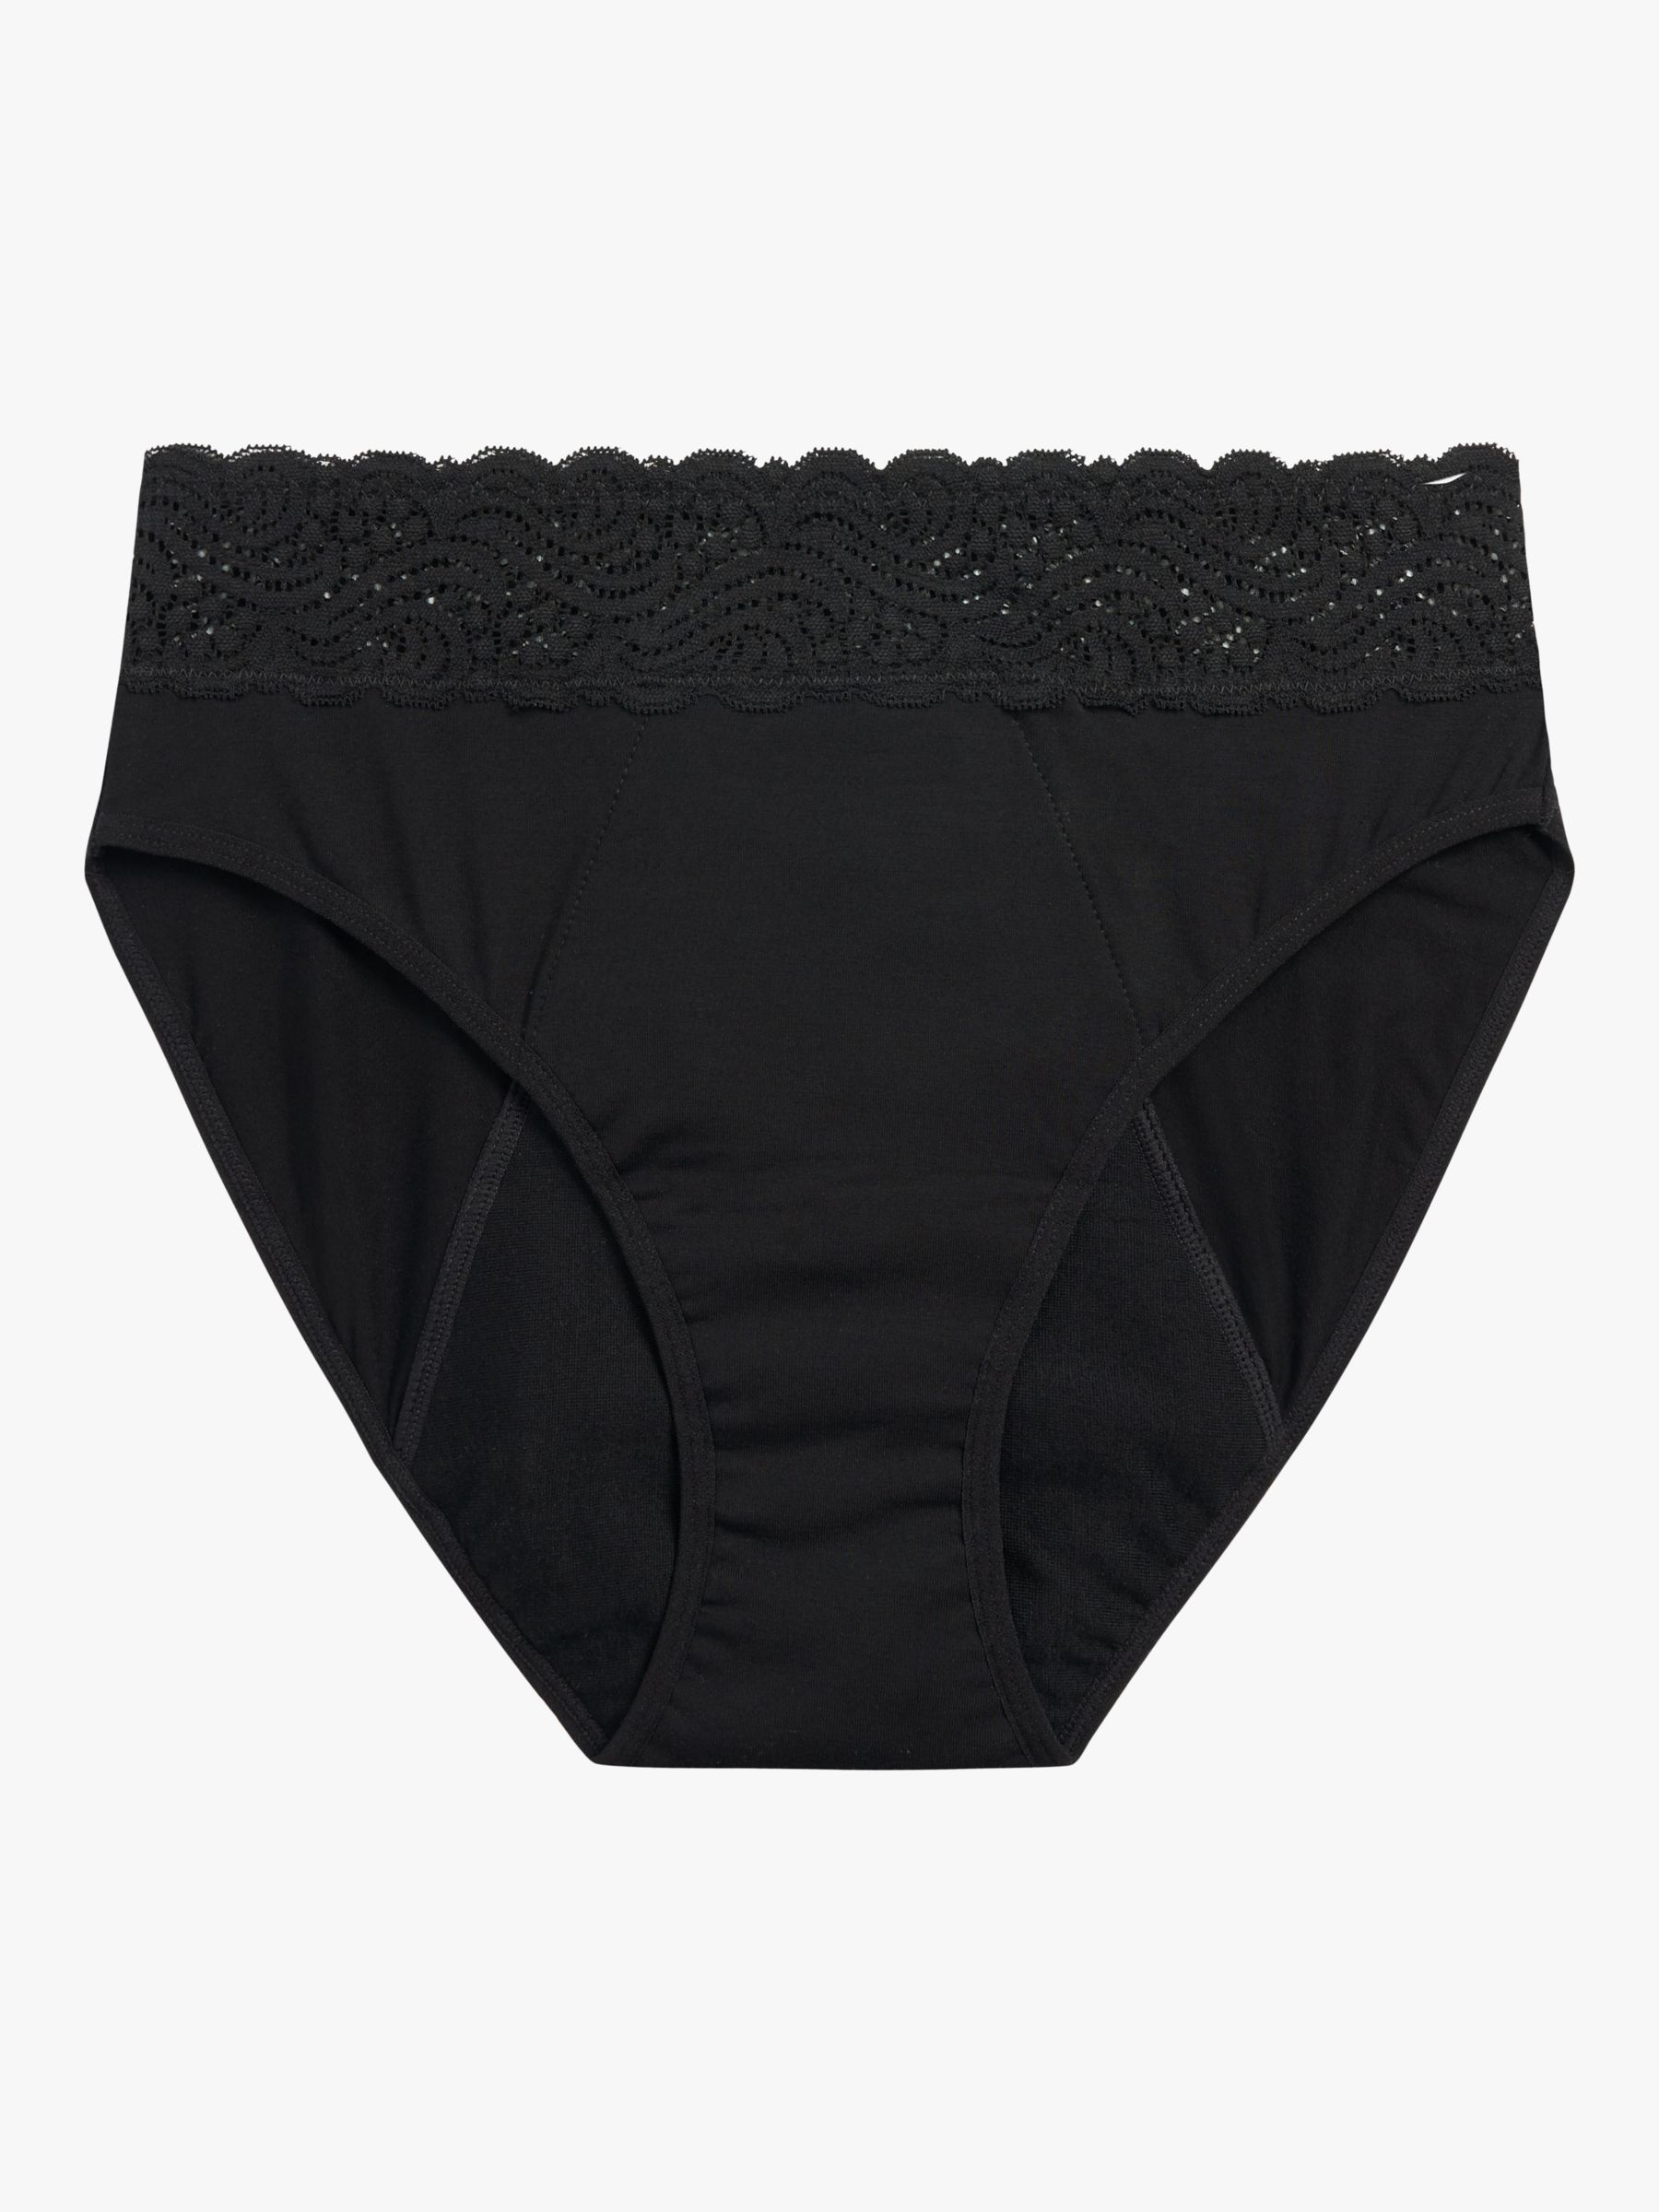 Chantelle Period Pants Knickers Graphic High Waist Briefs Menstrual  Underwear Black, Black, Medium : : Clothing, Shoes & Accessories